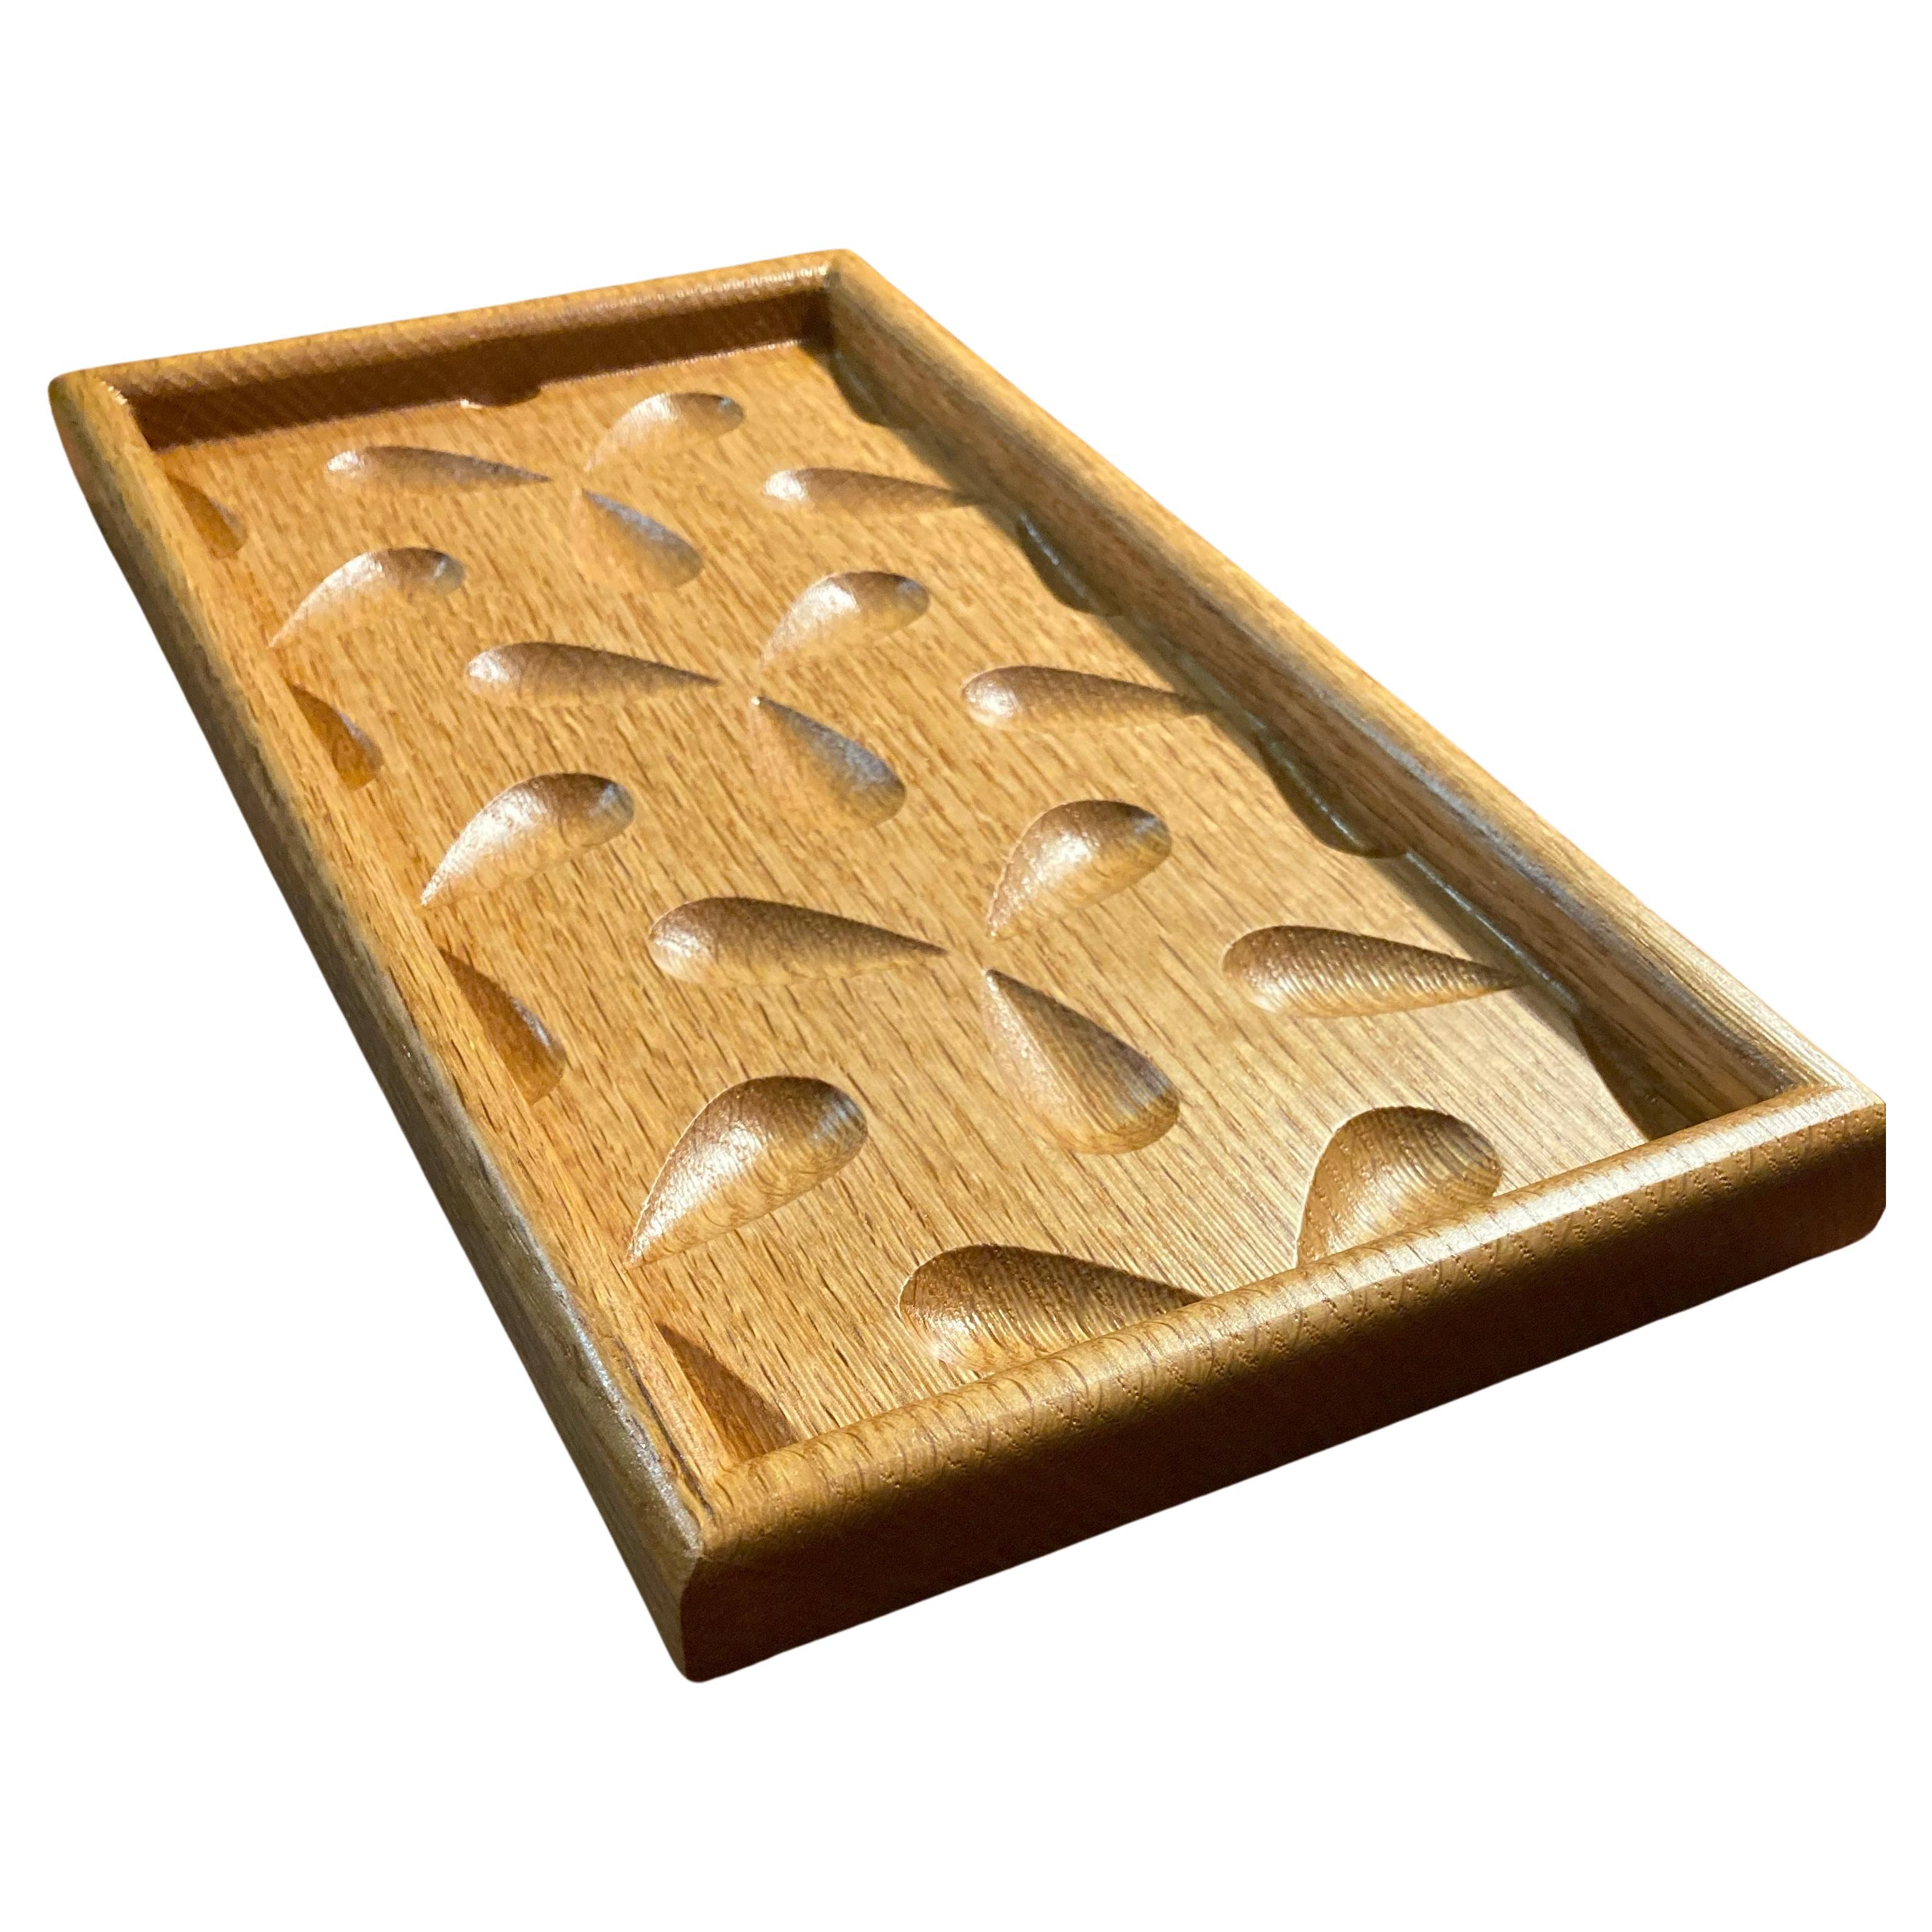 Wood valet tray vanity tray catchall tray home office dresser kitchen auf Lager im Angebot